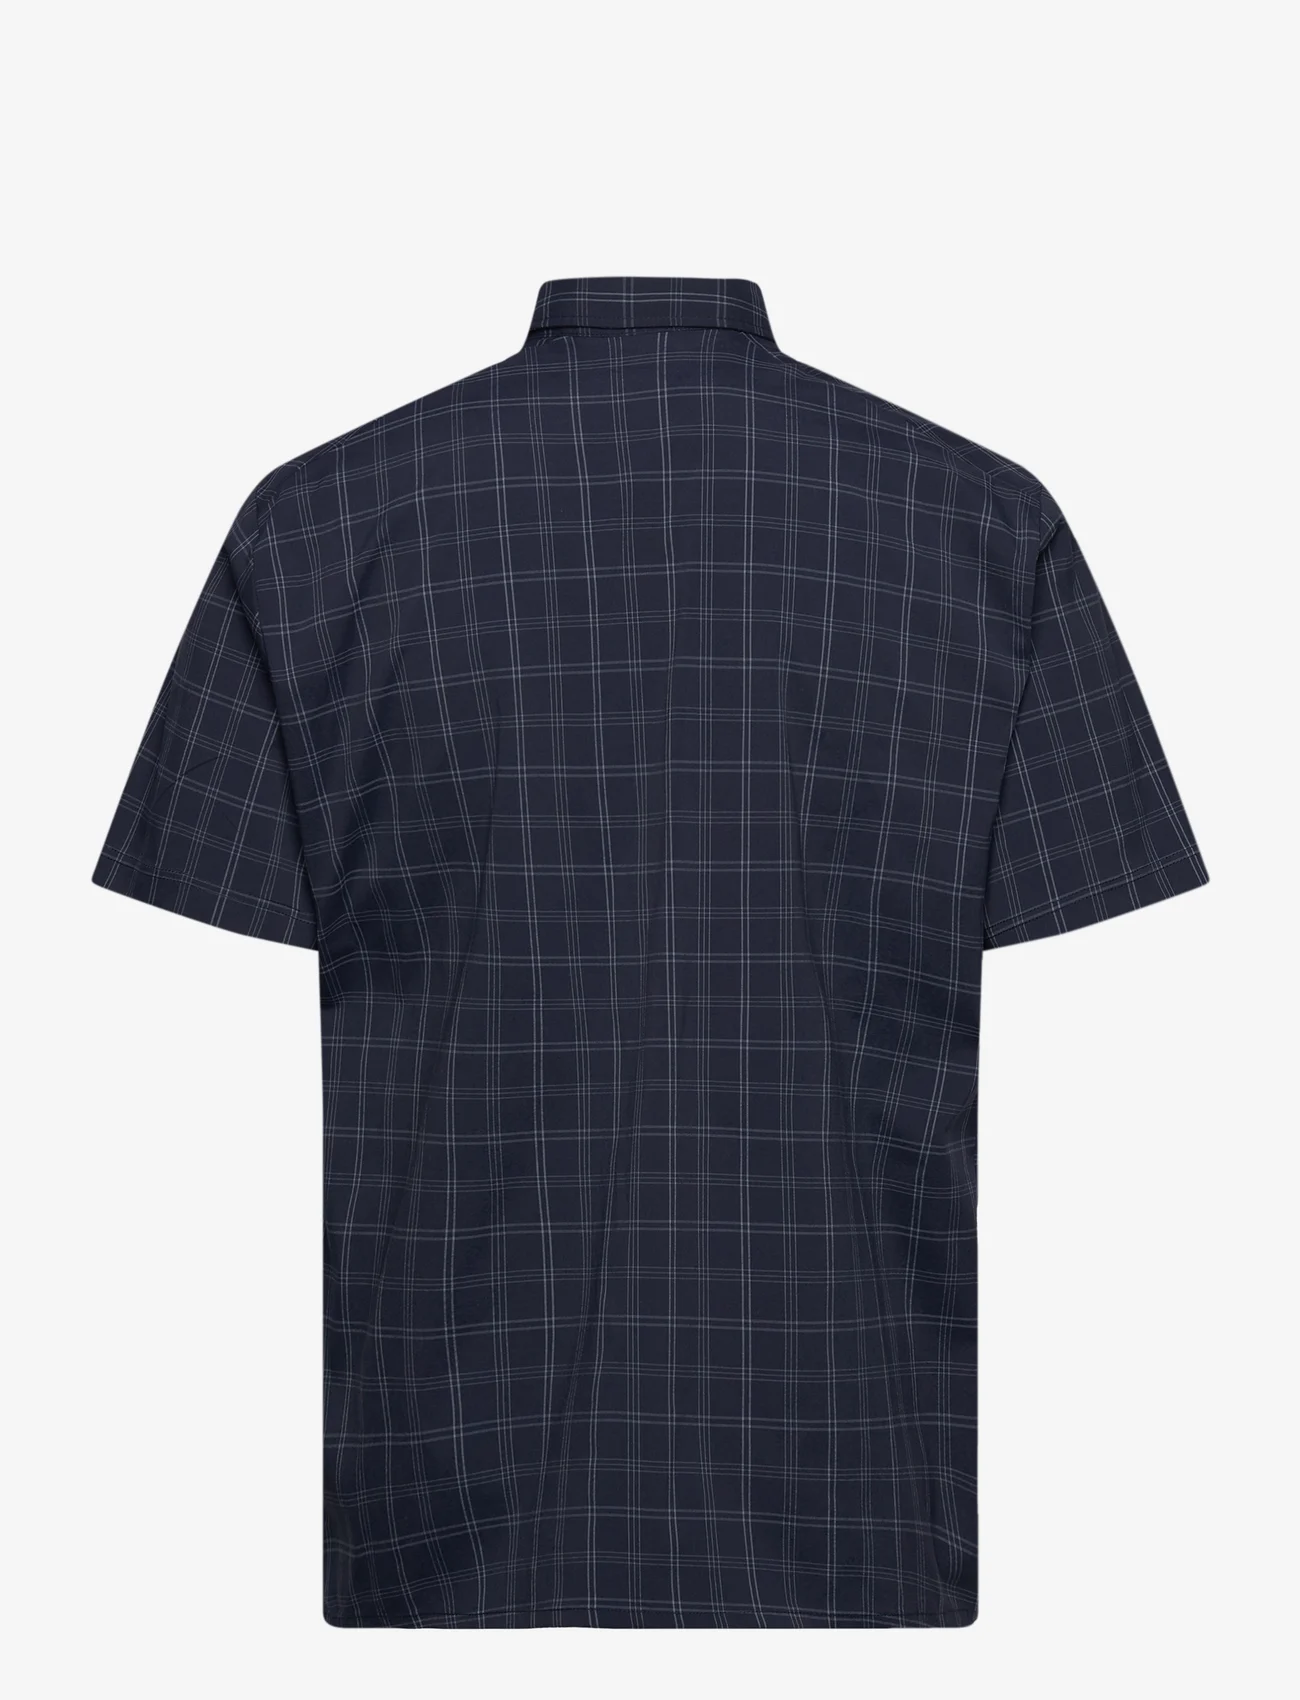 Jack Wolfskin - NORBO S/S SHIRT M - checkered shirts - night blue checks - 1